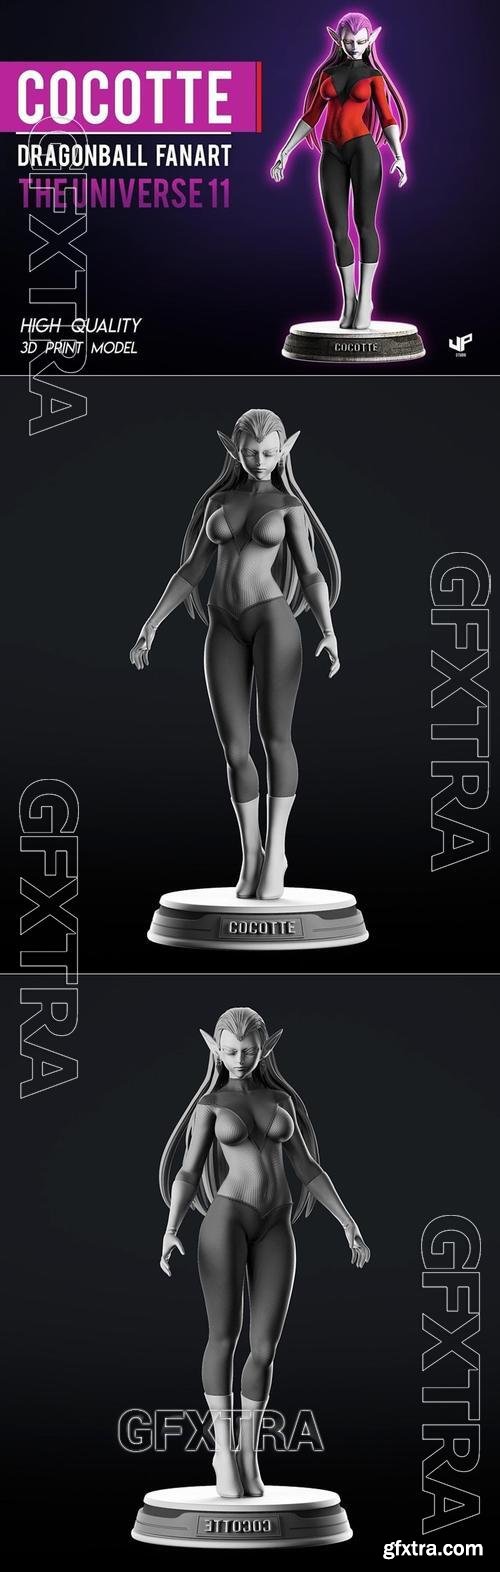 Cocotte Dragon Ball – 3D Print Model